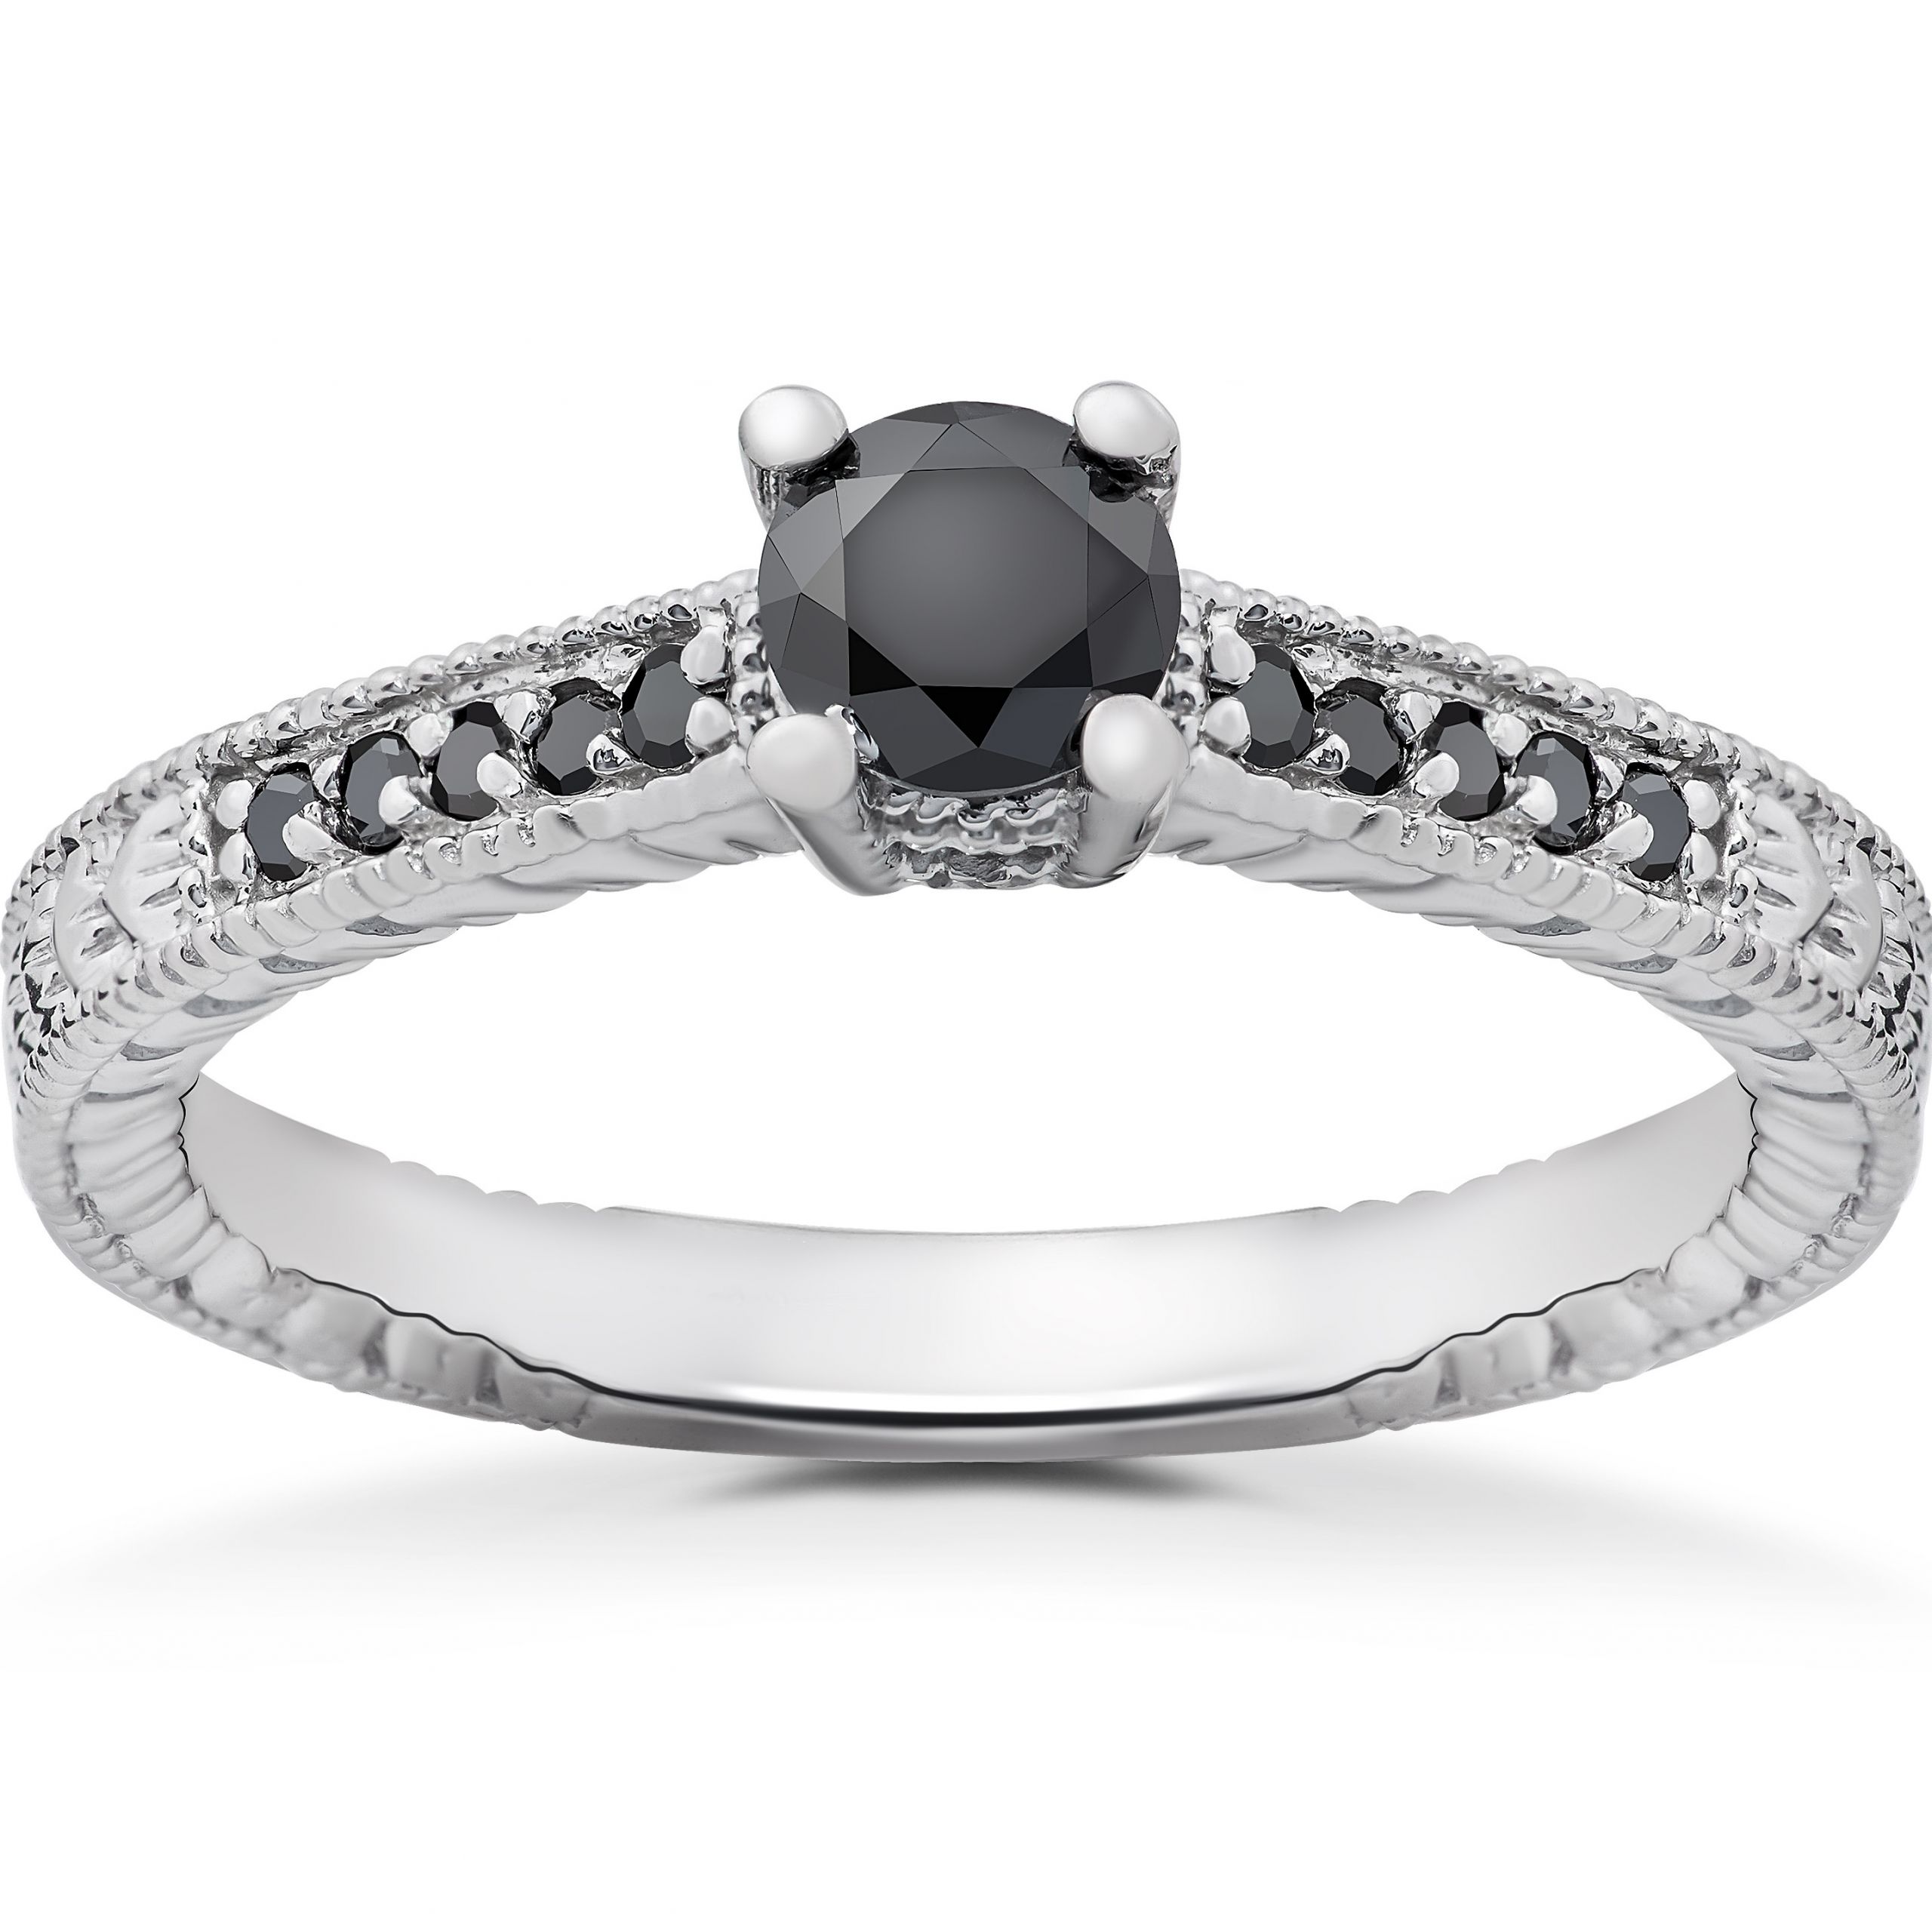 Black Diamond Wedding Band
 1 2 ct Black Diamond Vintage Engagement Ring 14k White